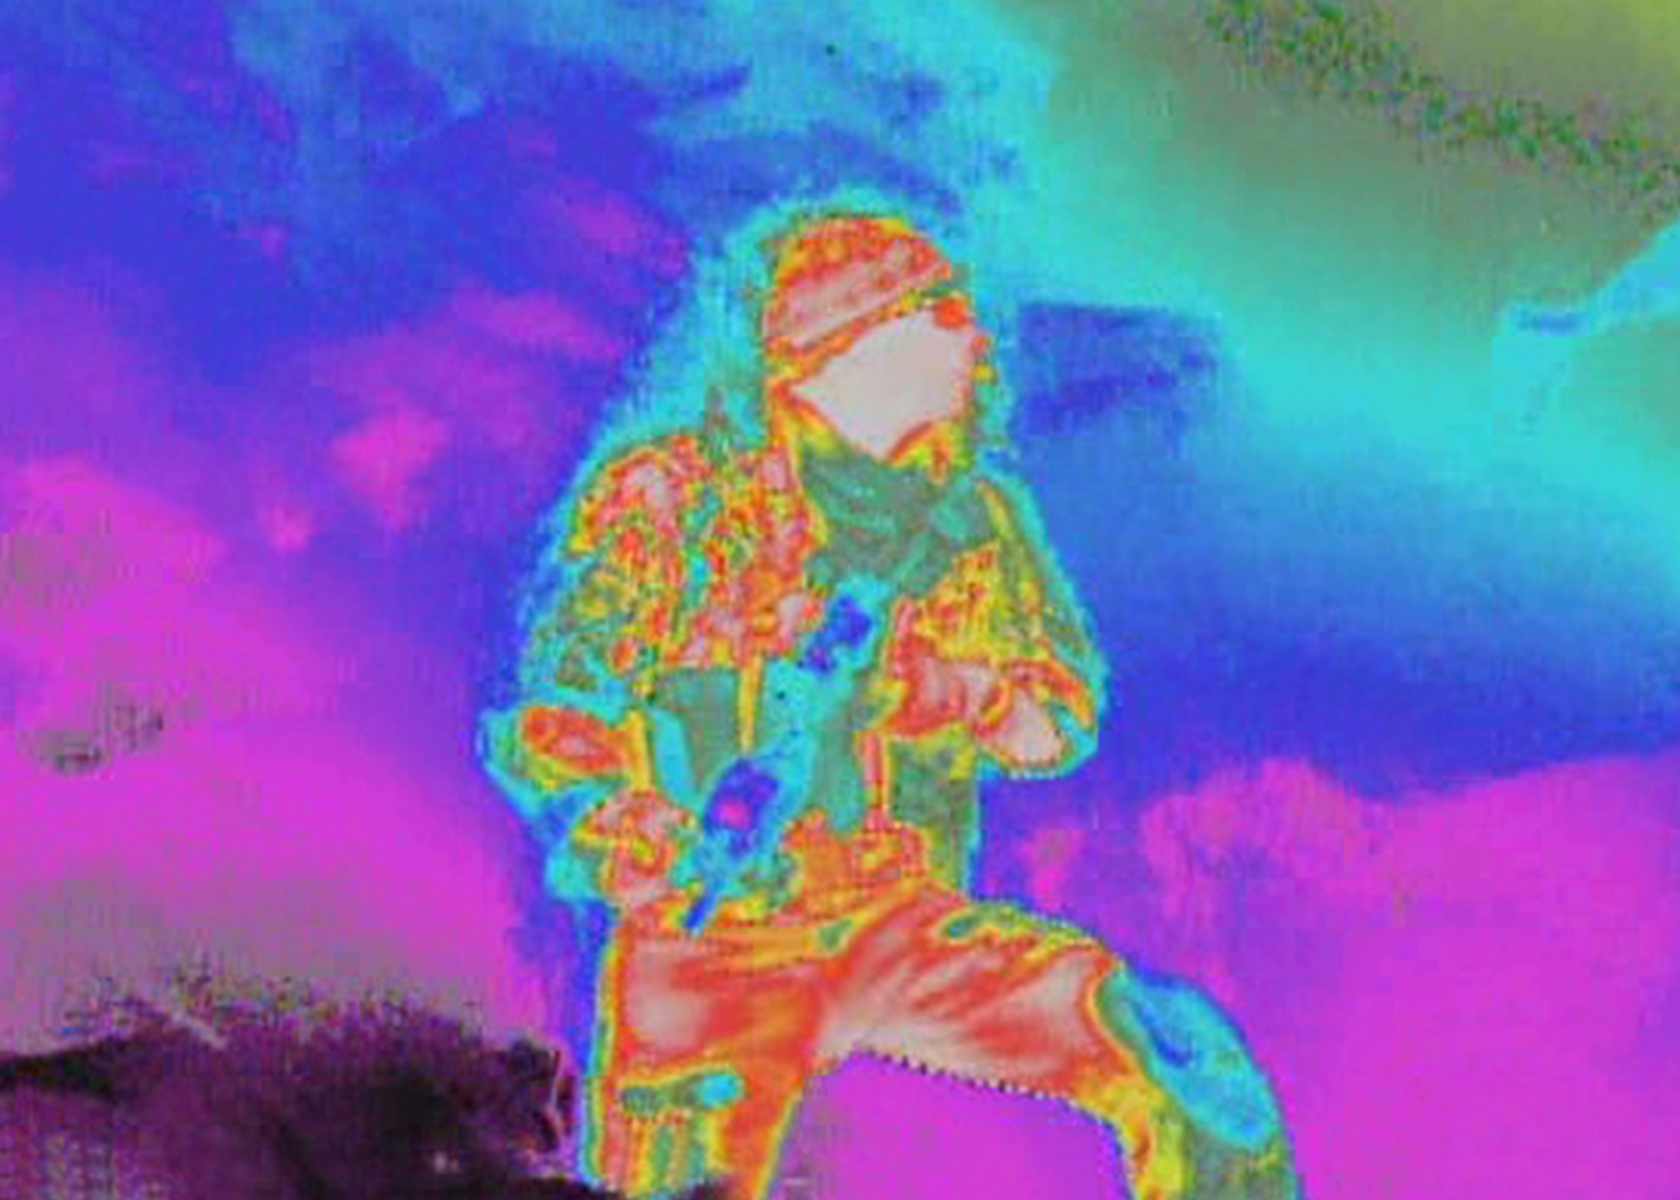 thermal imaging monocular flir command armasight prometheus vision night ocular bi under nightvisionhome